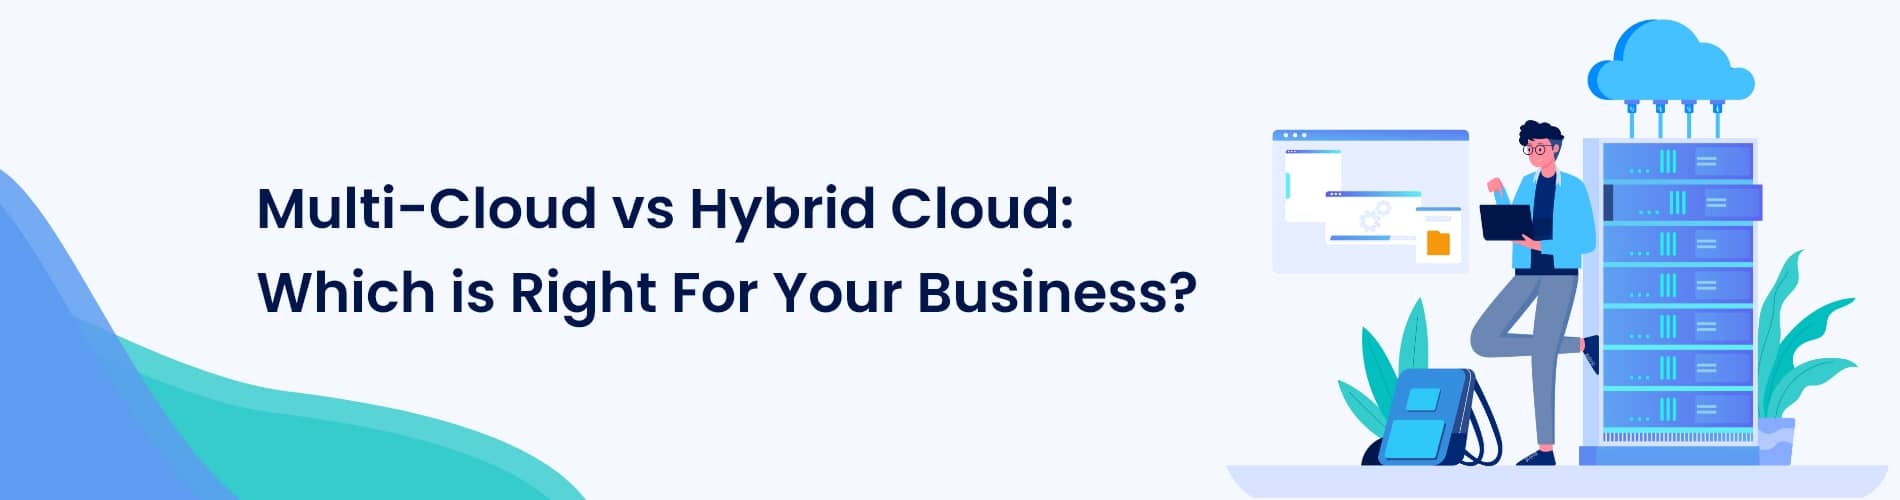 multi-cloud vs hybrid cloud